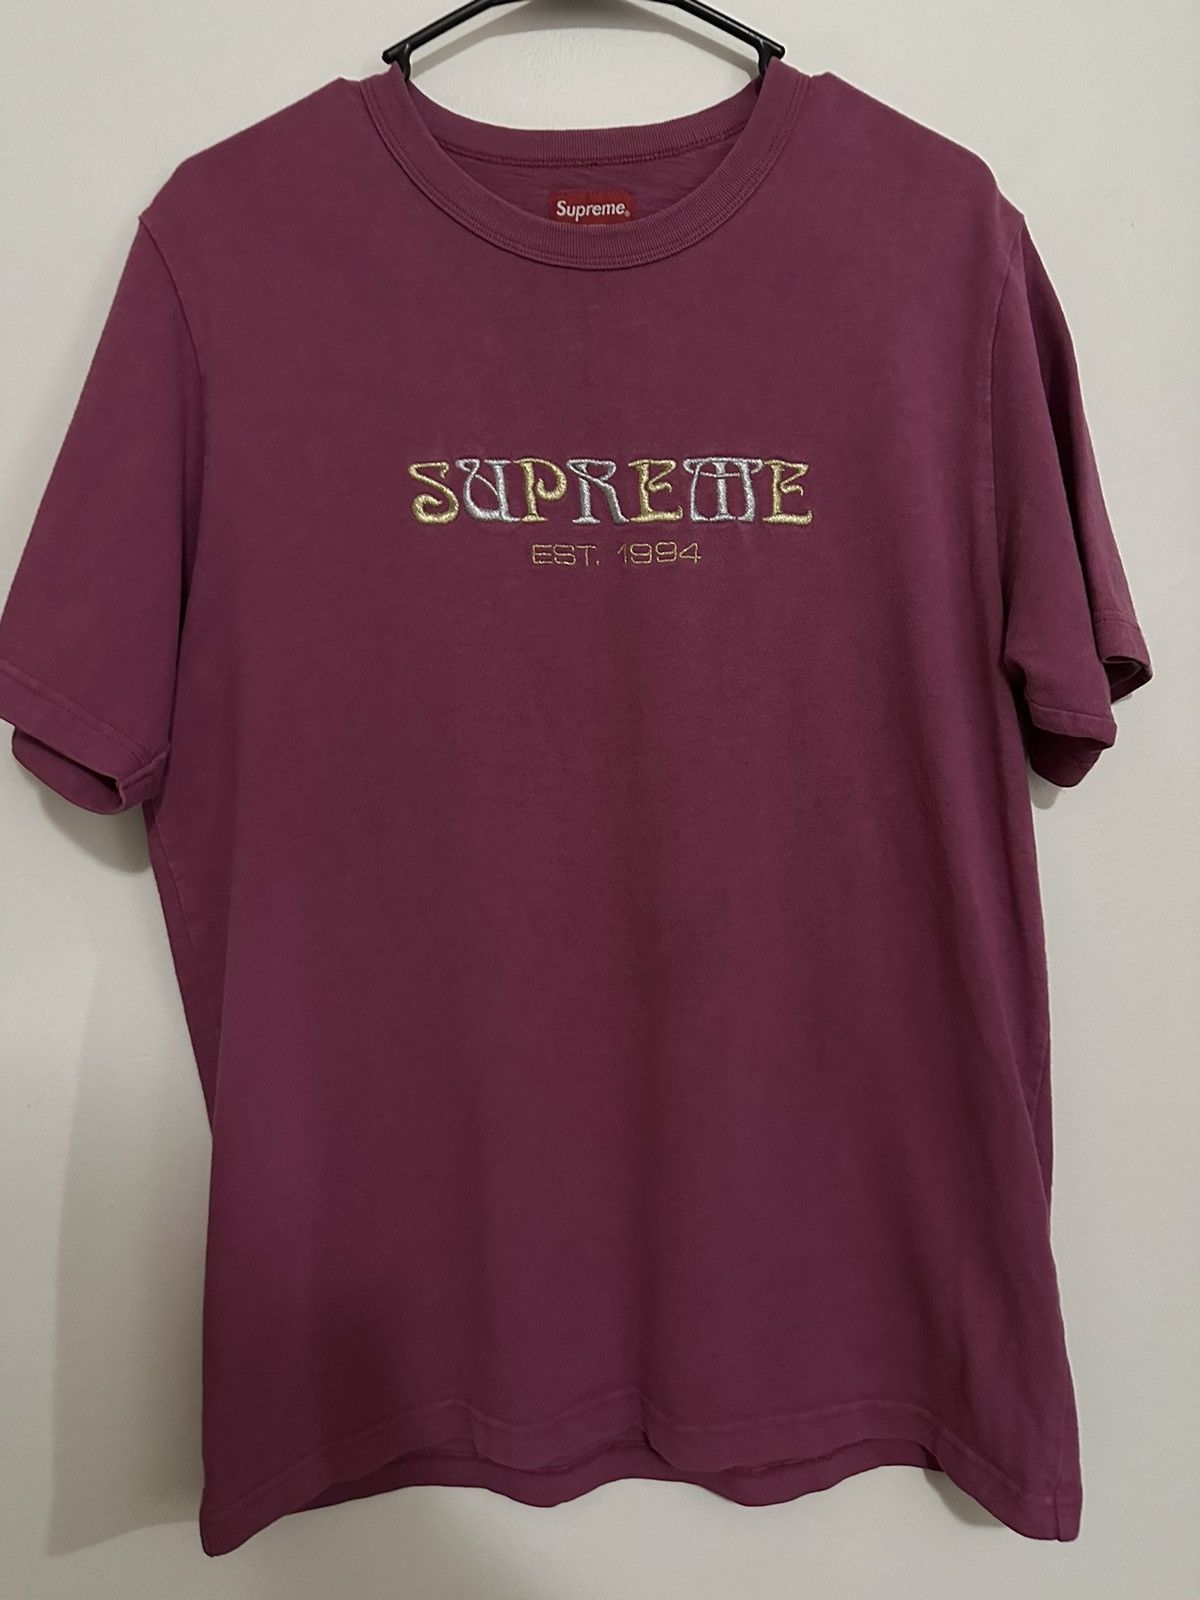 Supreme Supreme Nouveau Logo Embroidered Tee | Grailed